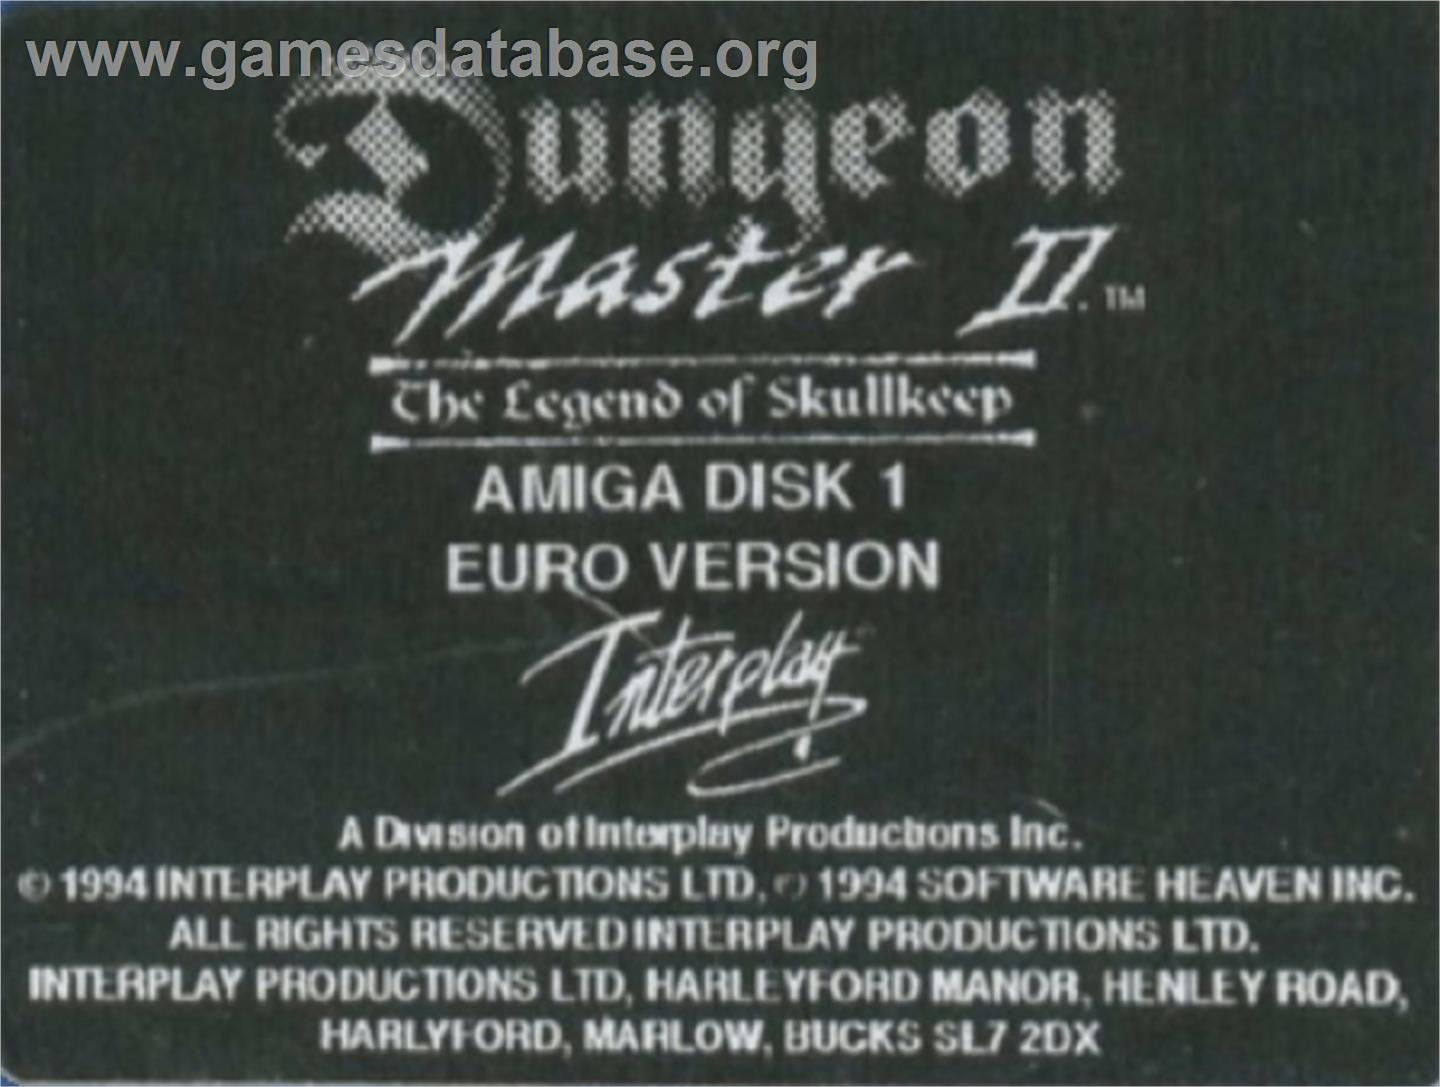 Dungeon Master II: The Legend of Skullkeep - Commodore Amiga - Artwork - Cartridge Top